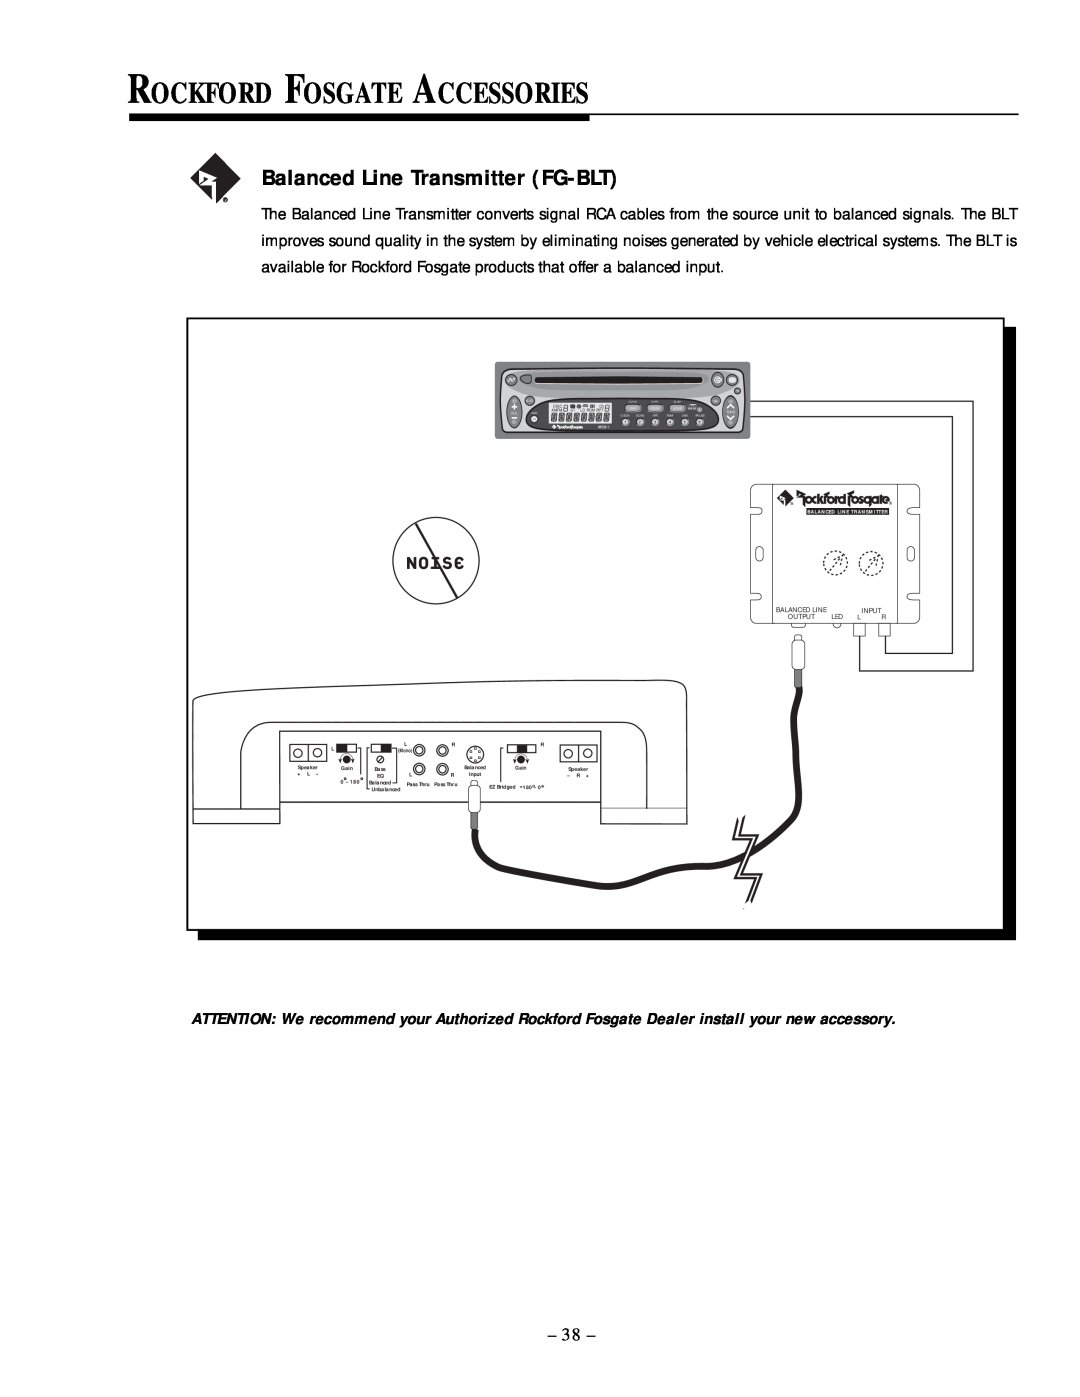 Rockford Fosgate 50.1, 50.2 manual Rockford Fosgate Accessories, Noise, Balanced Line Transmitter FG-BLT 